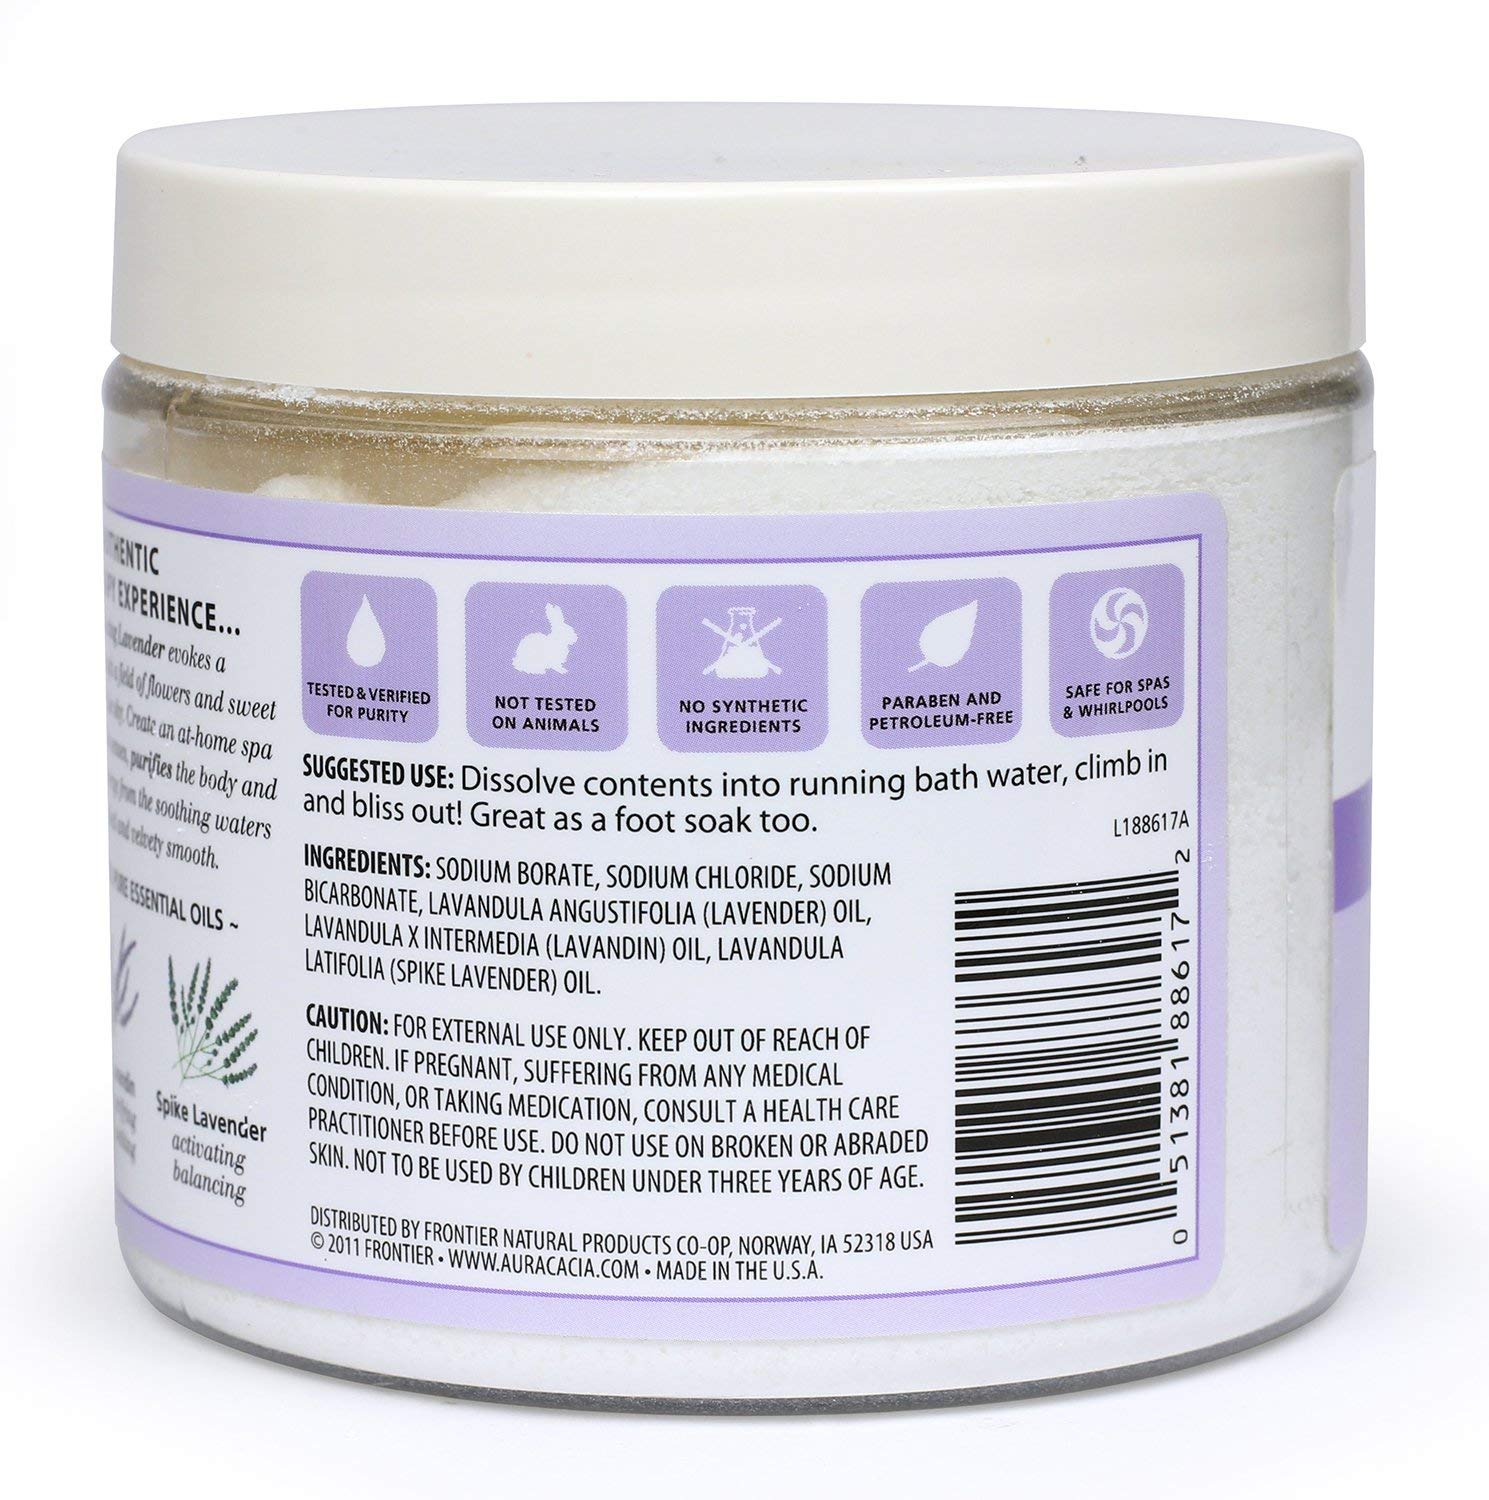 Aura Cacia Lavender Harvest Aromatherapy Mineral Bath Salt, 16 Ounce - 3 per case.3